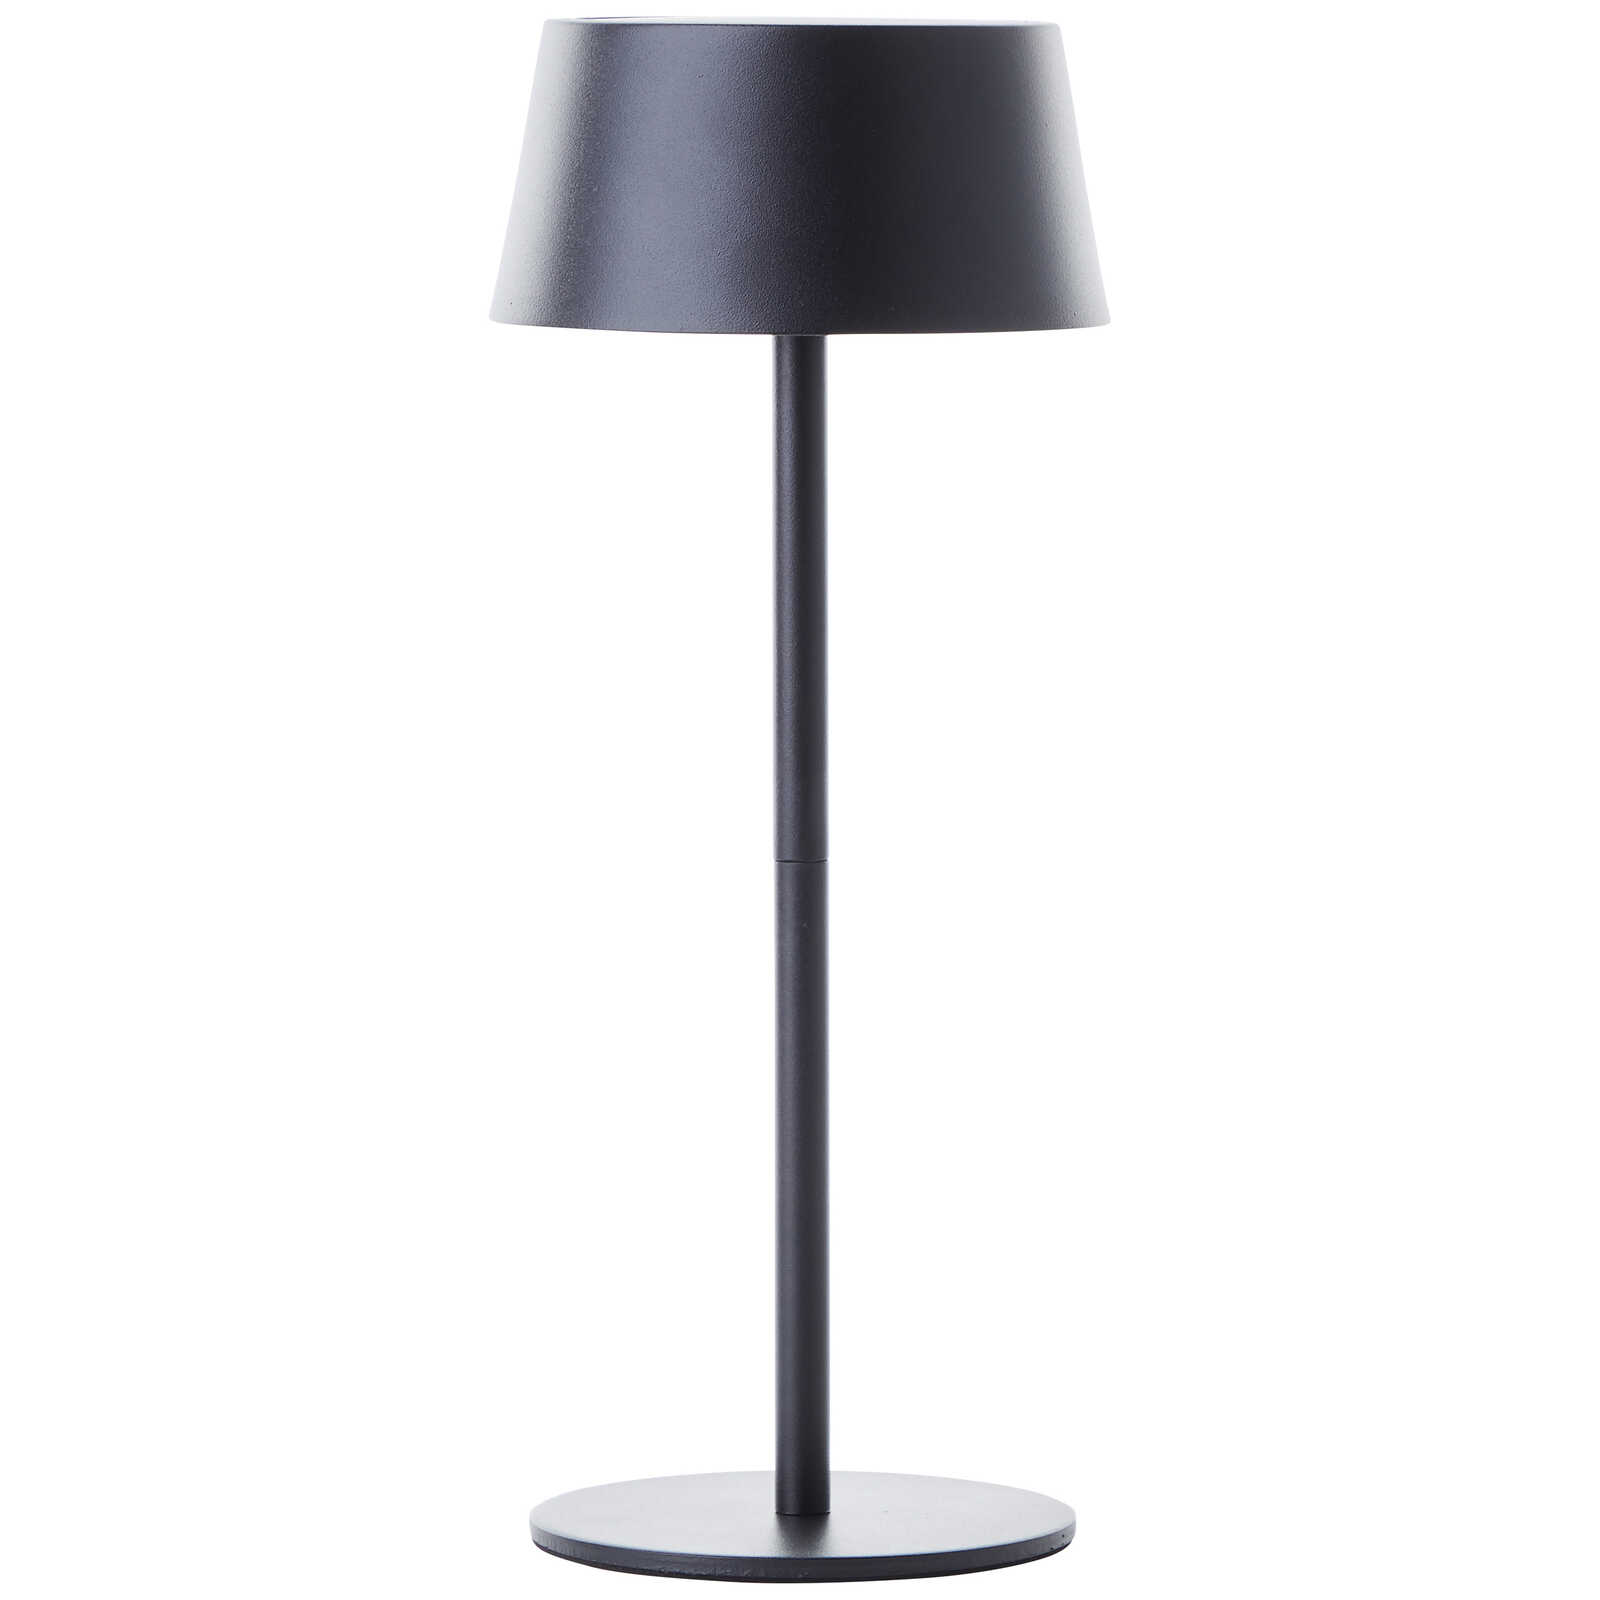             Lampe de table en métal - Outy 3 - Noir
        